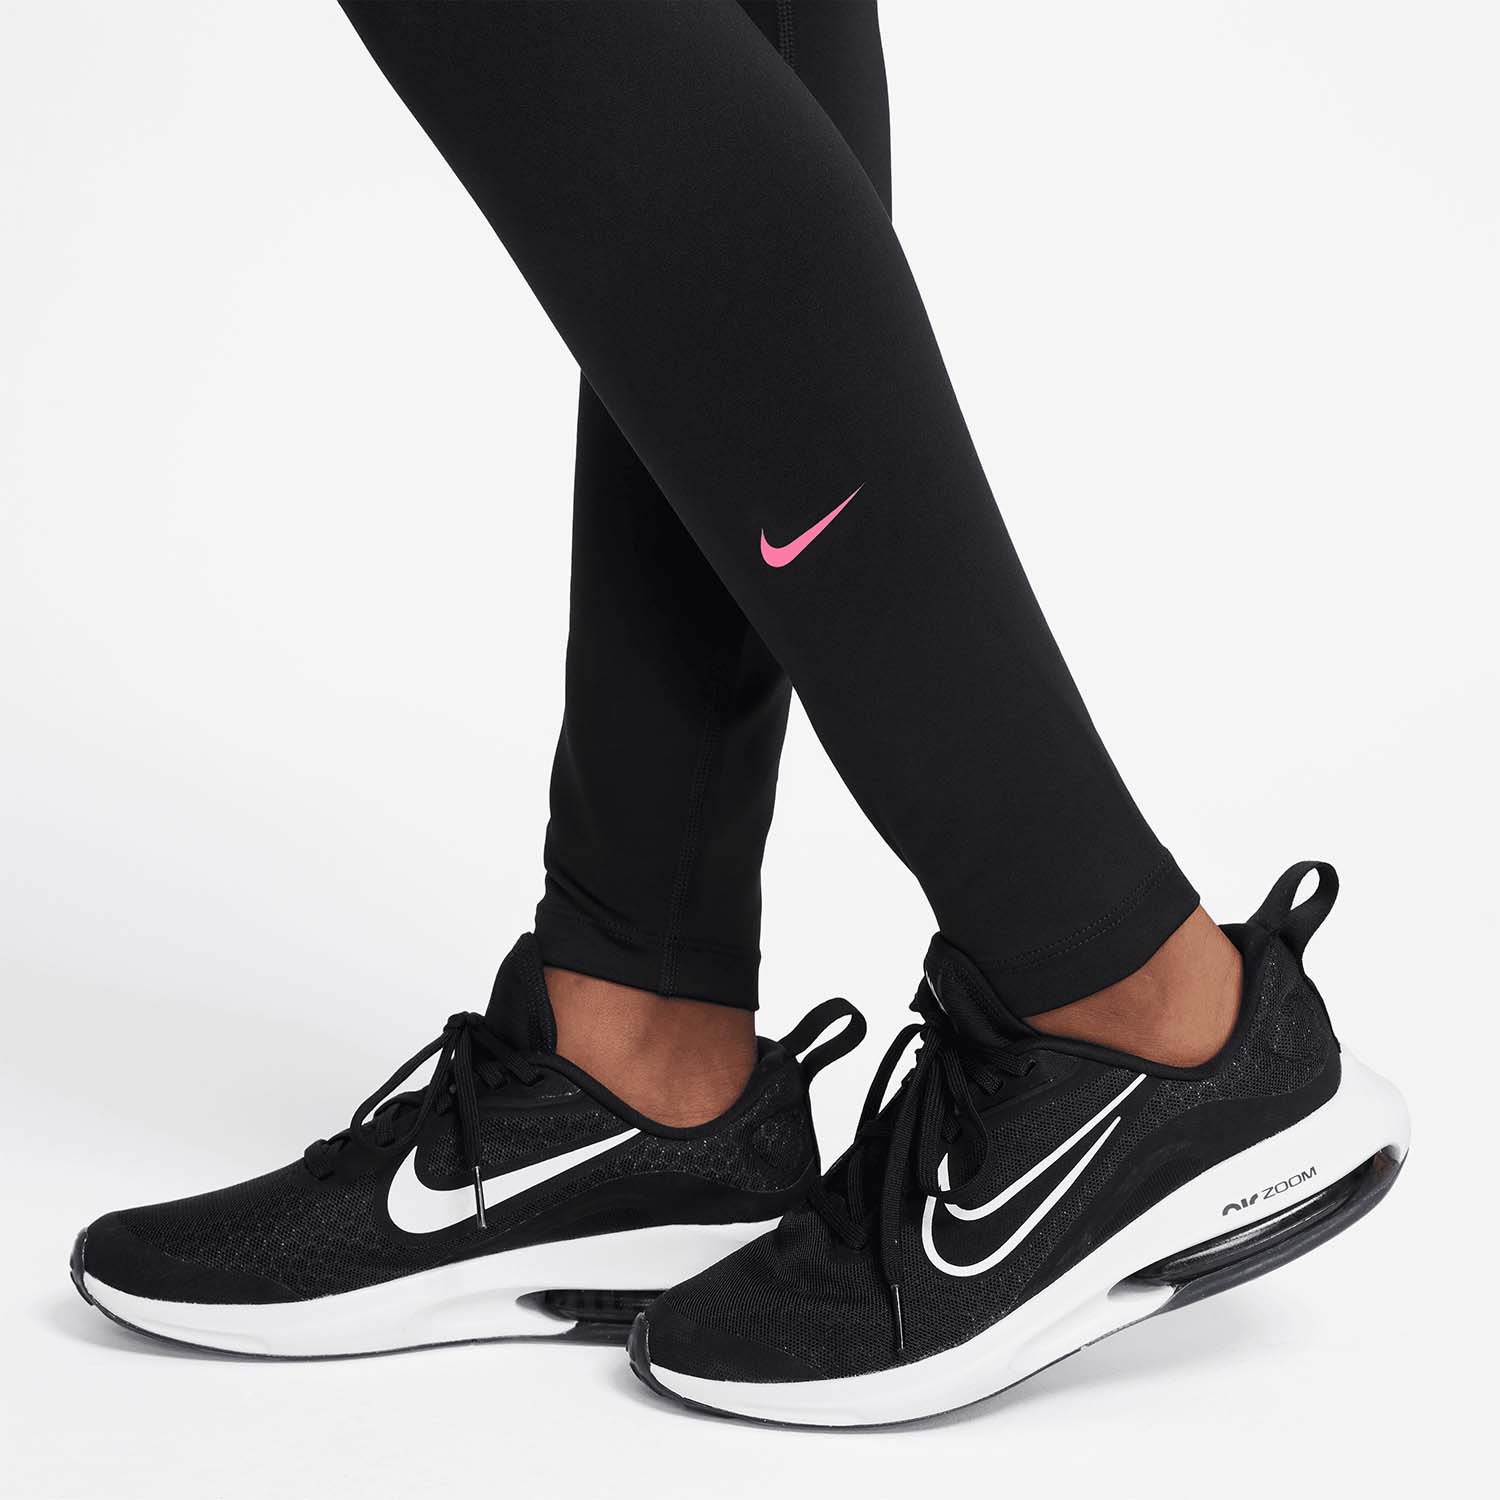 Nike Dri-FIT One Tights Bambina - Black/Sunset Pulse